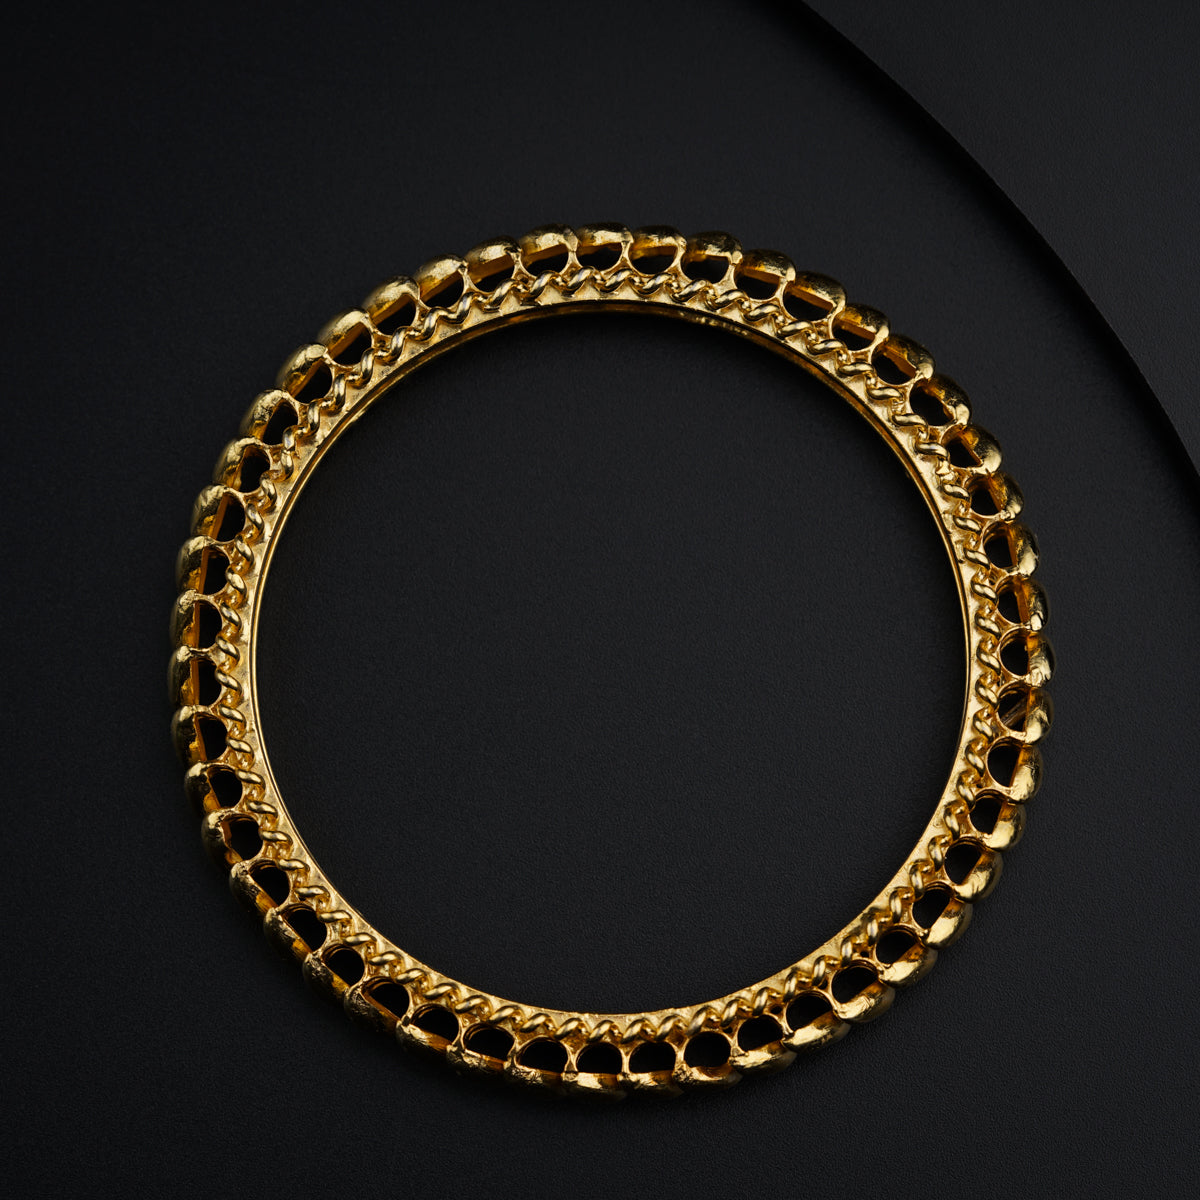 a gold chain bracelet on a black surface